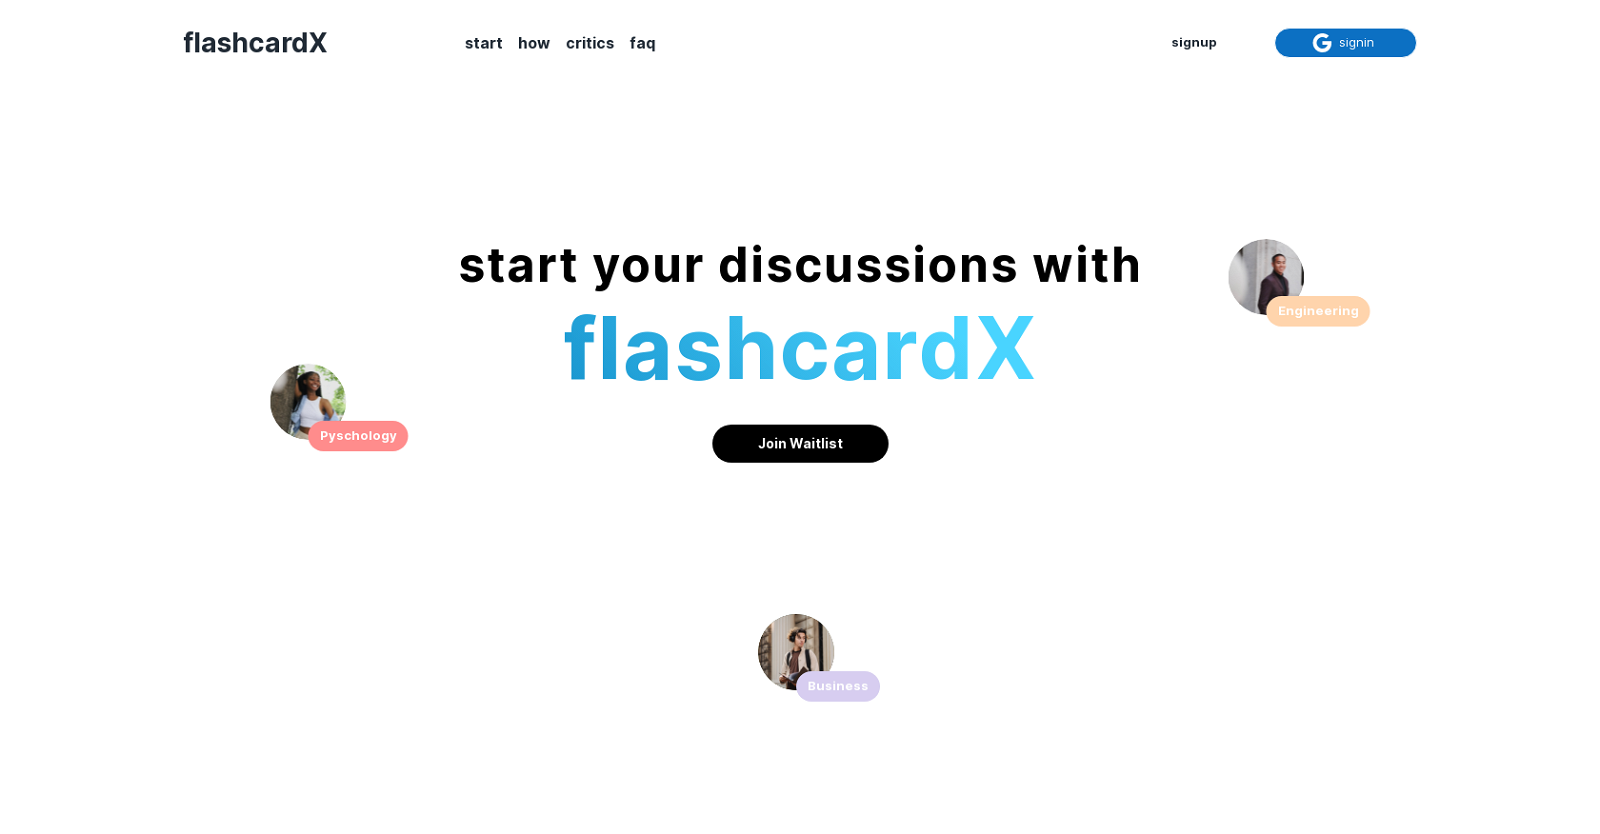 FlashcardX website